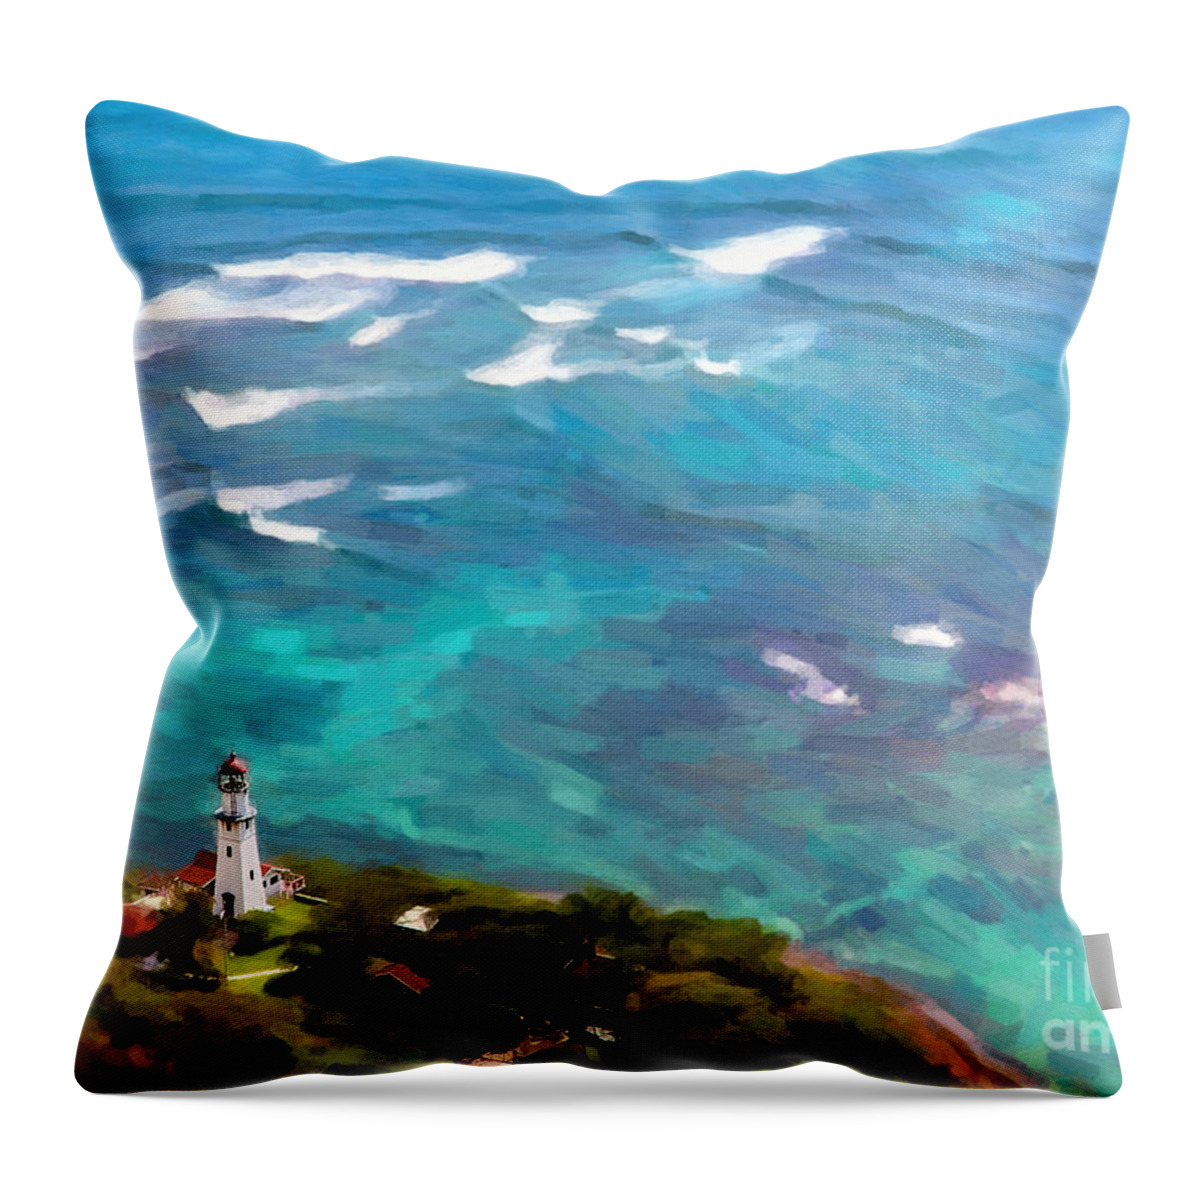 Jon Burch Throw Pillow featuring the photograph Diamond Head Lighthouse View by Jon Burch Photography